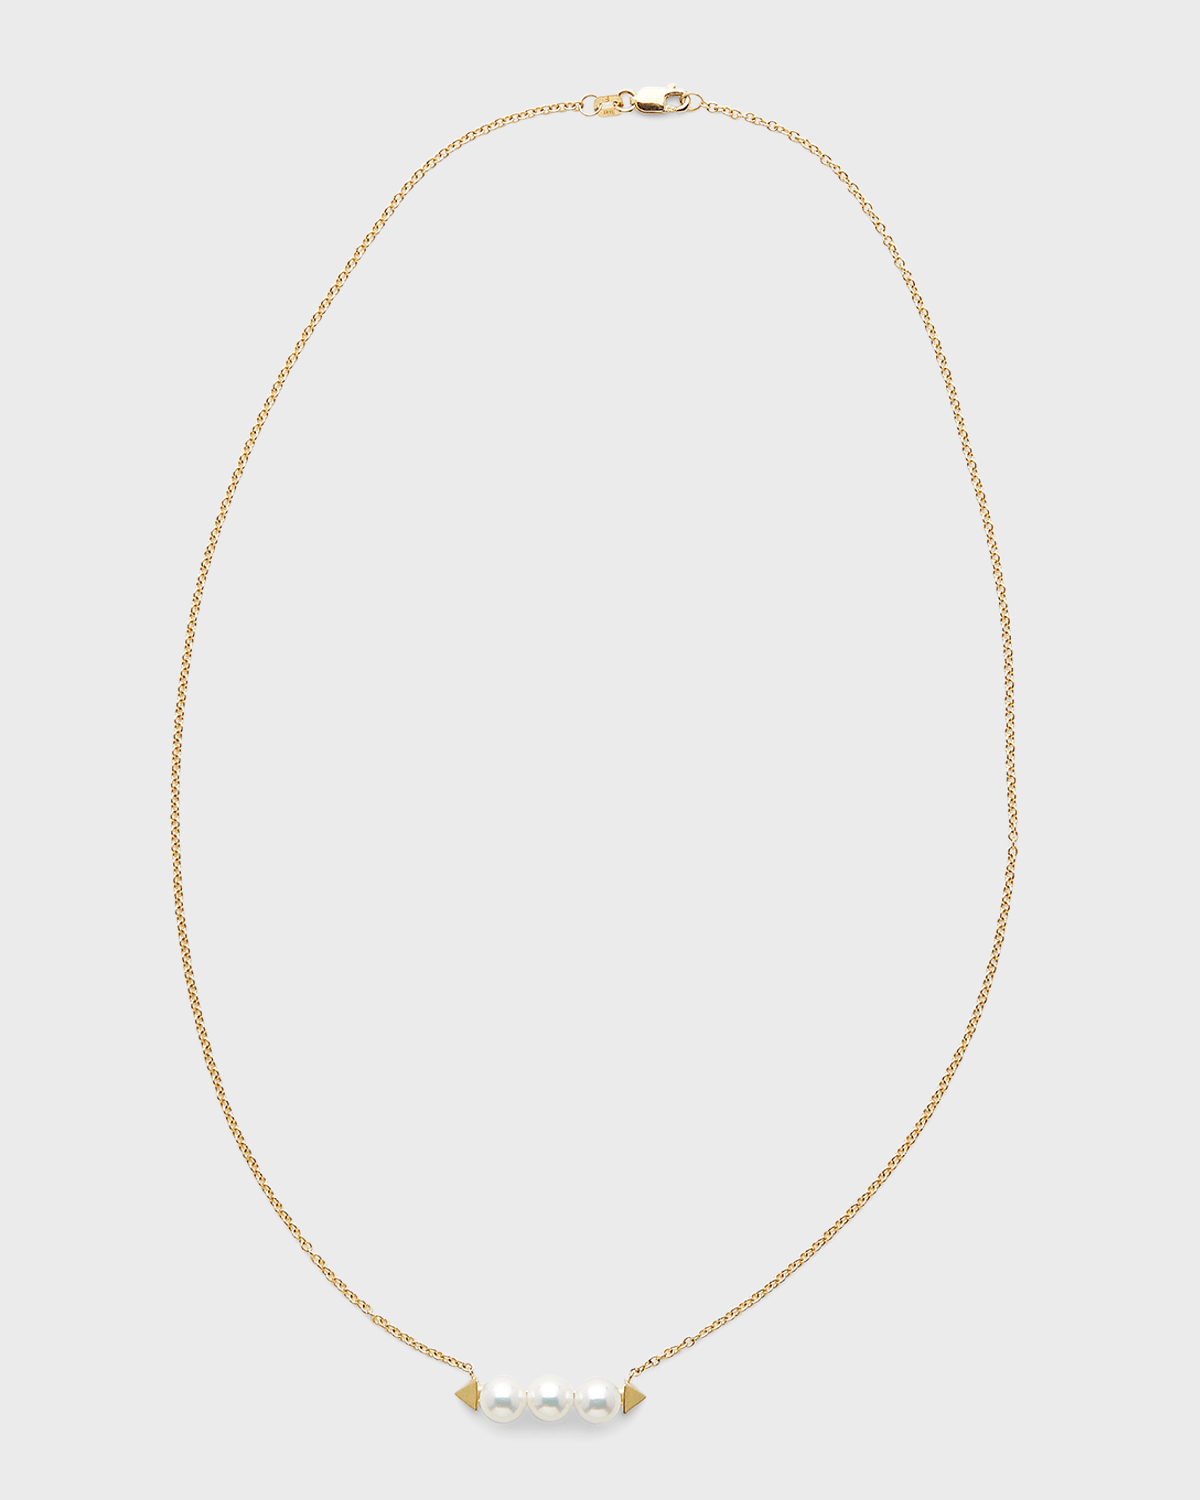 18K Yellow Gold 6mm Akoya 3-Pearl Bar Pendant Necklace, 16-18"L